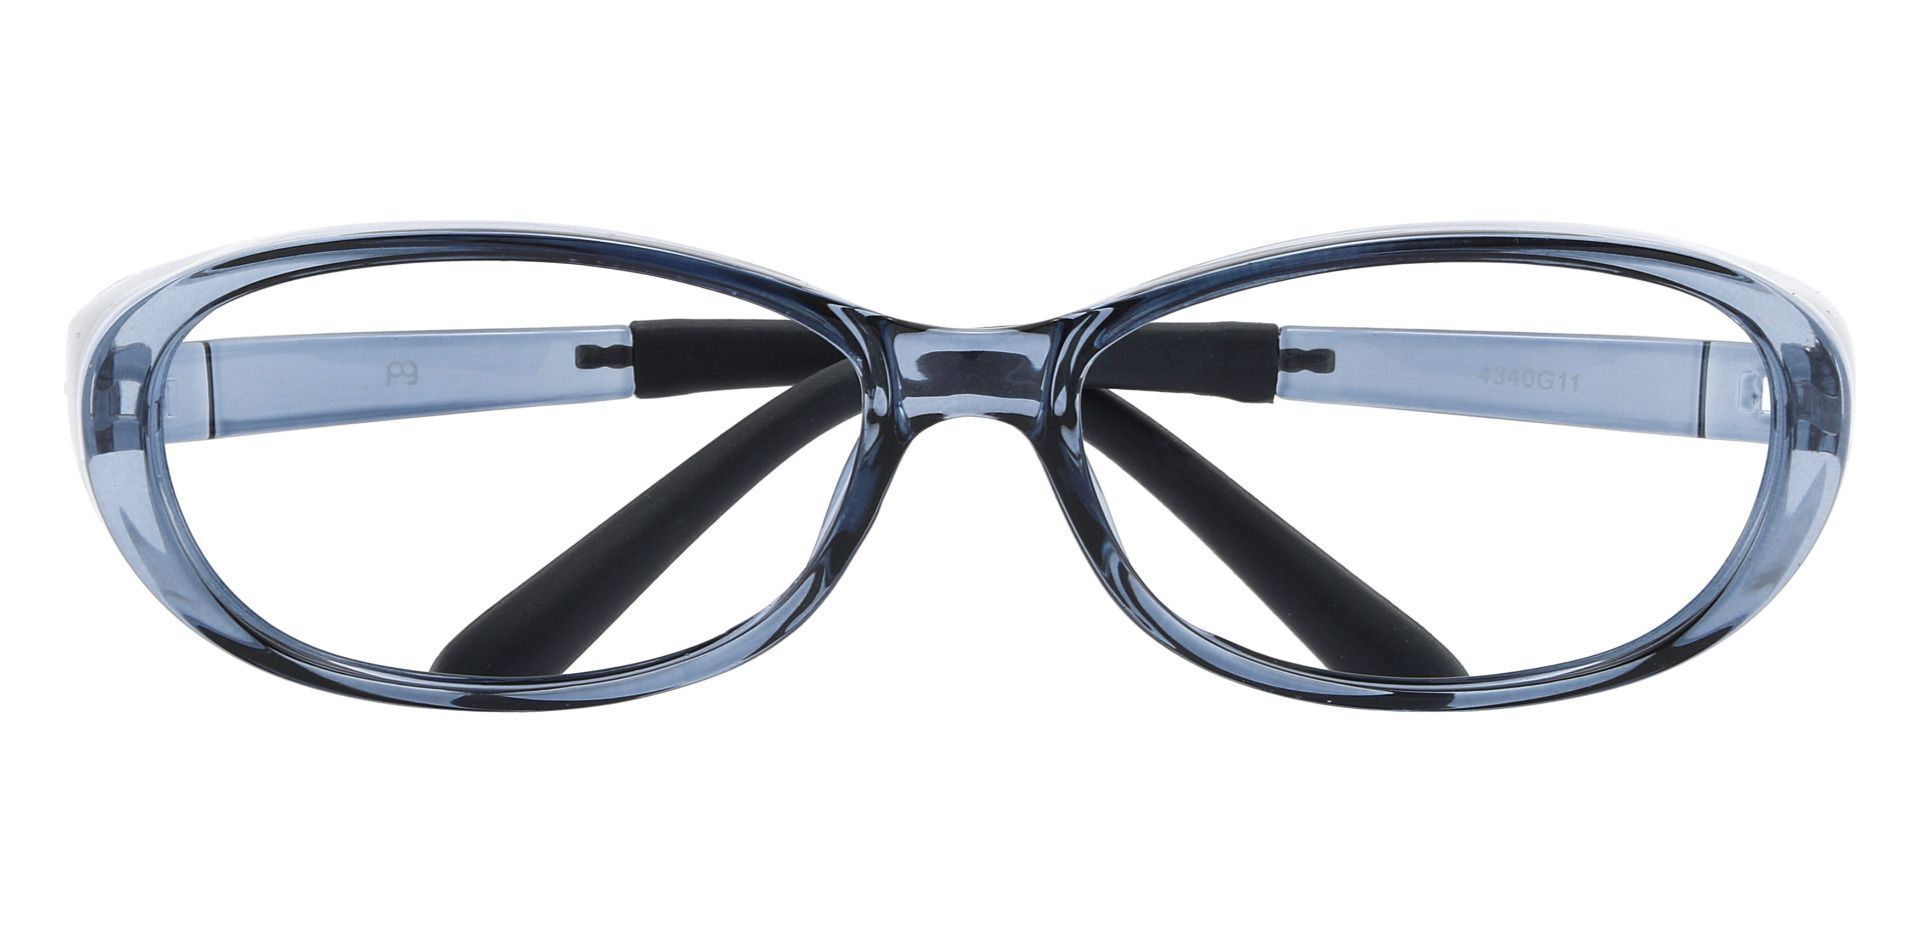 Holt Sports Goggles Prescription Glasses - Gray